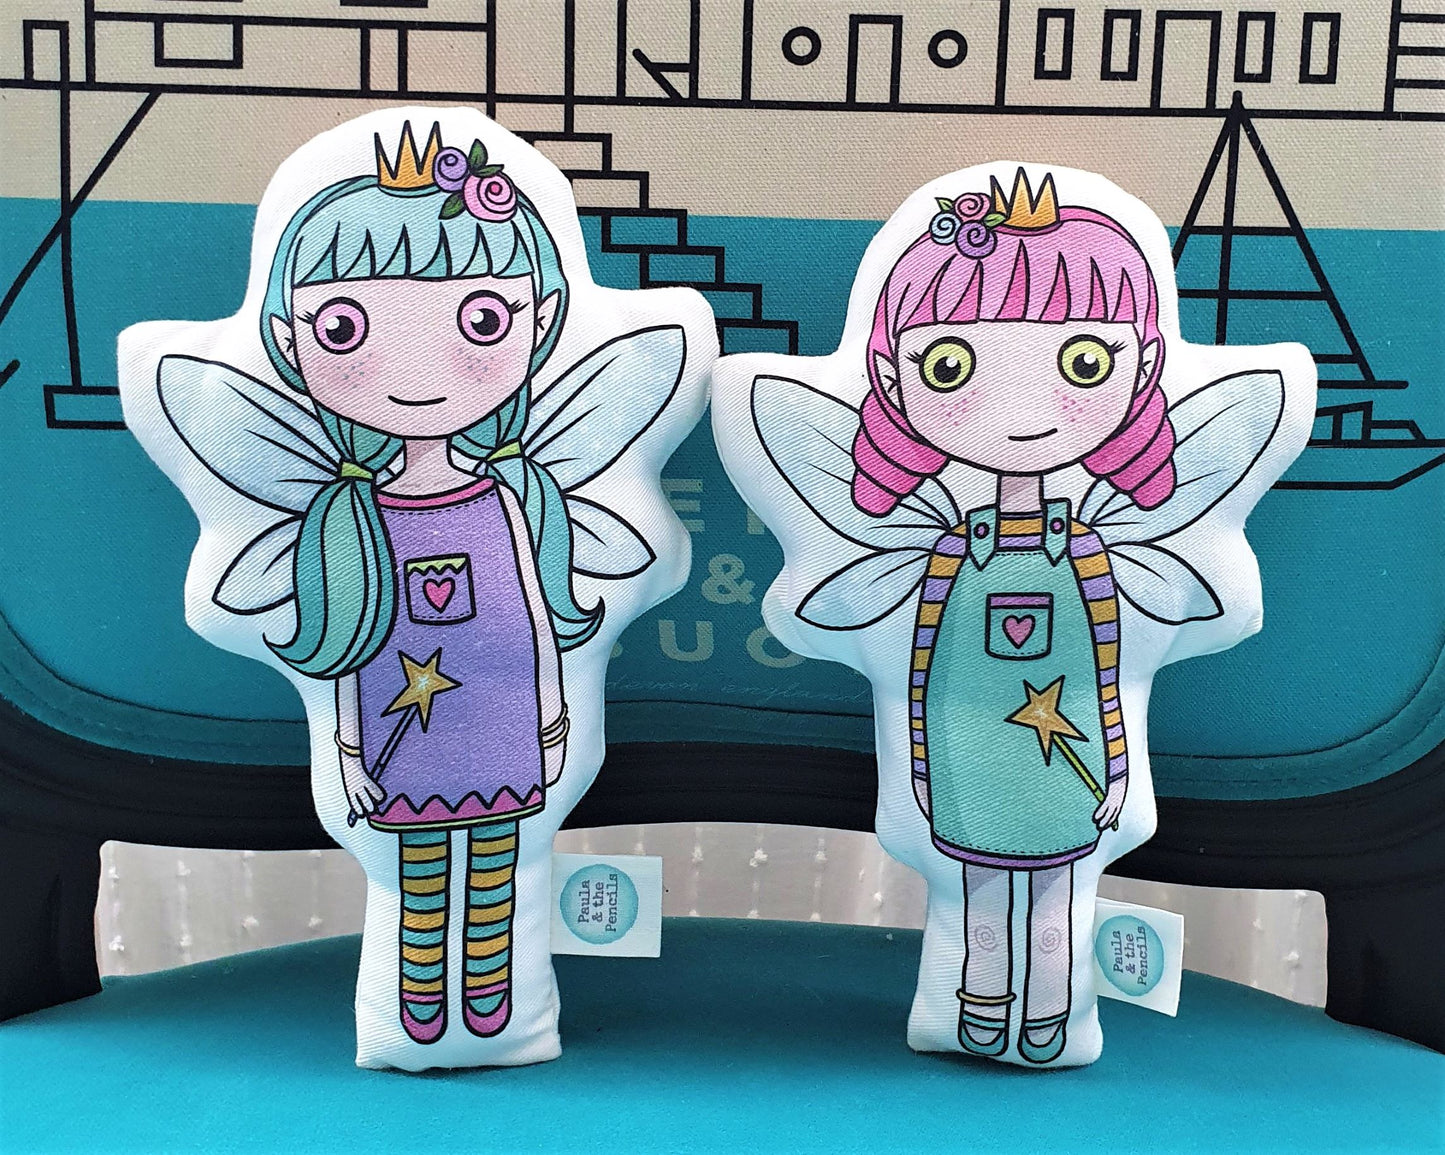 Fairy Stickers